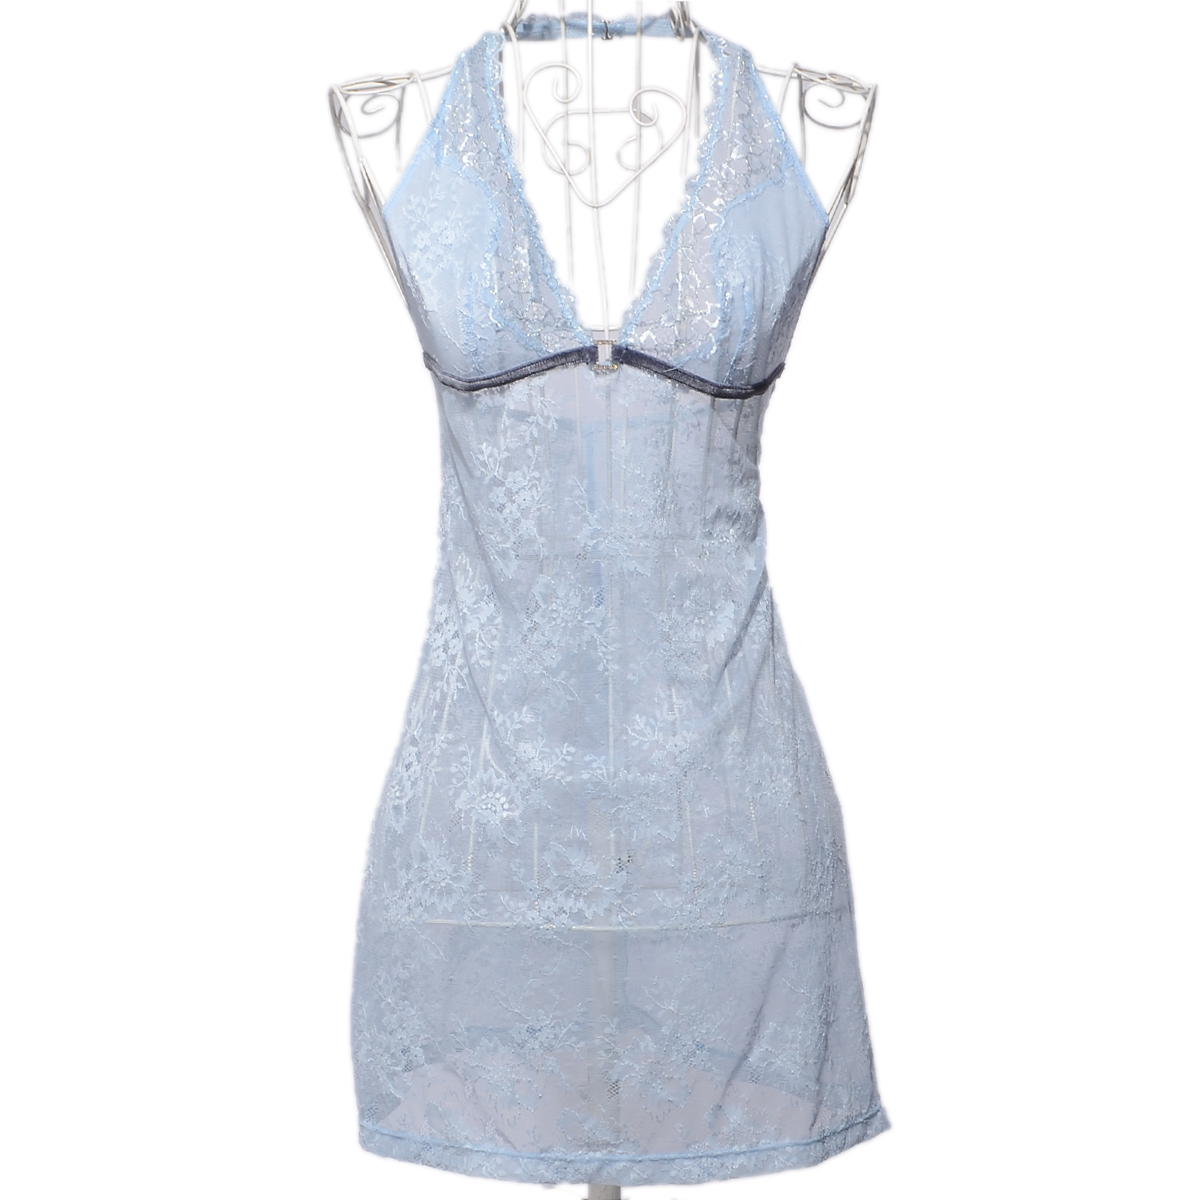 Elegant sexy halter-neck nightgown lounge Sky Blue lace spaghetti strap transparent sleepwear